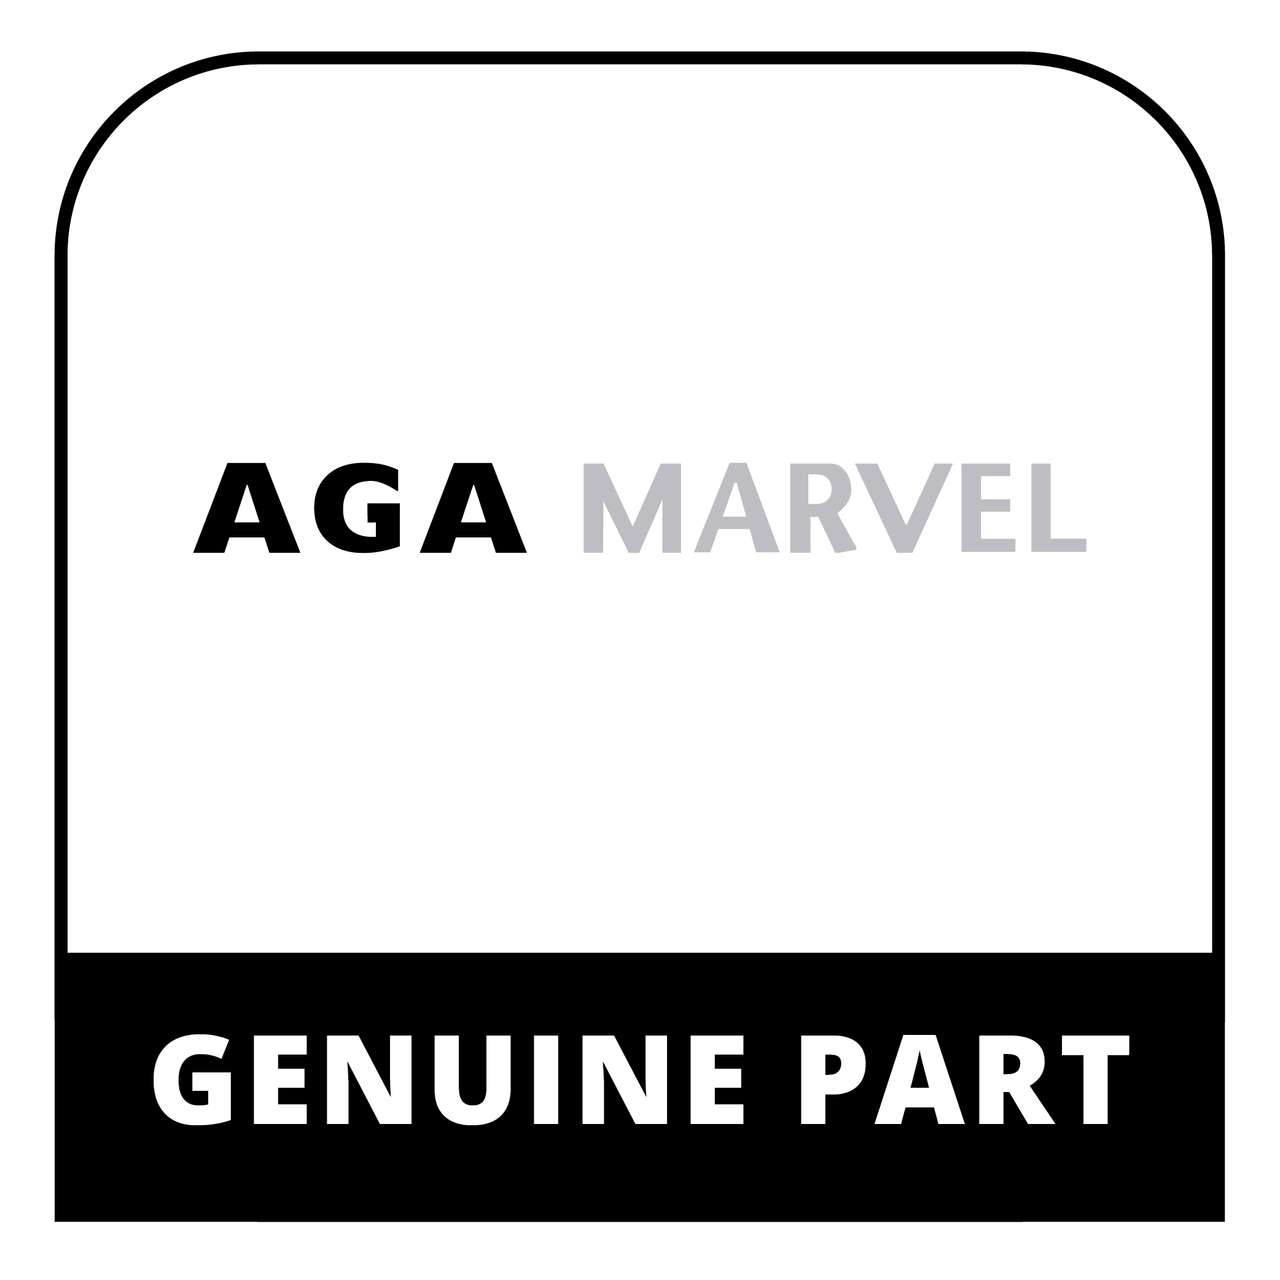 AGA Marvel RO2V323036 - Top - Oil Control Cover 208K - Genuine AGA Marvel Part